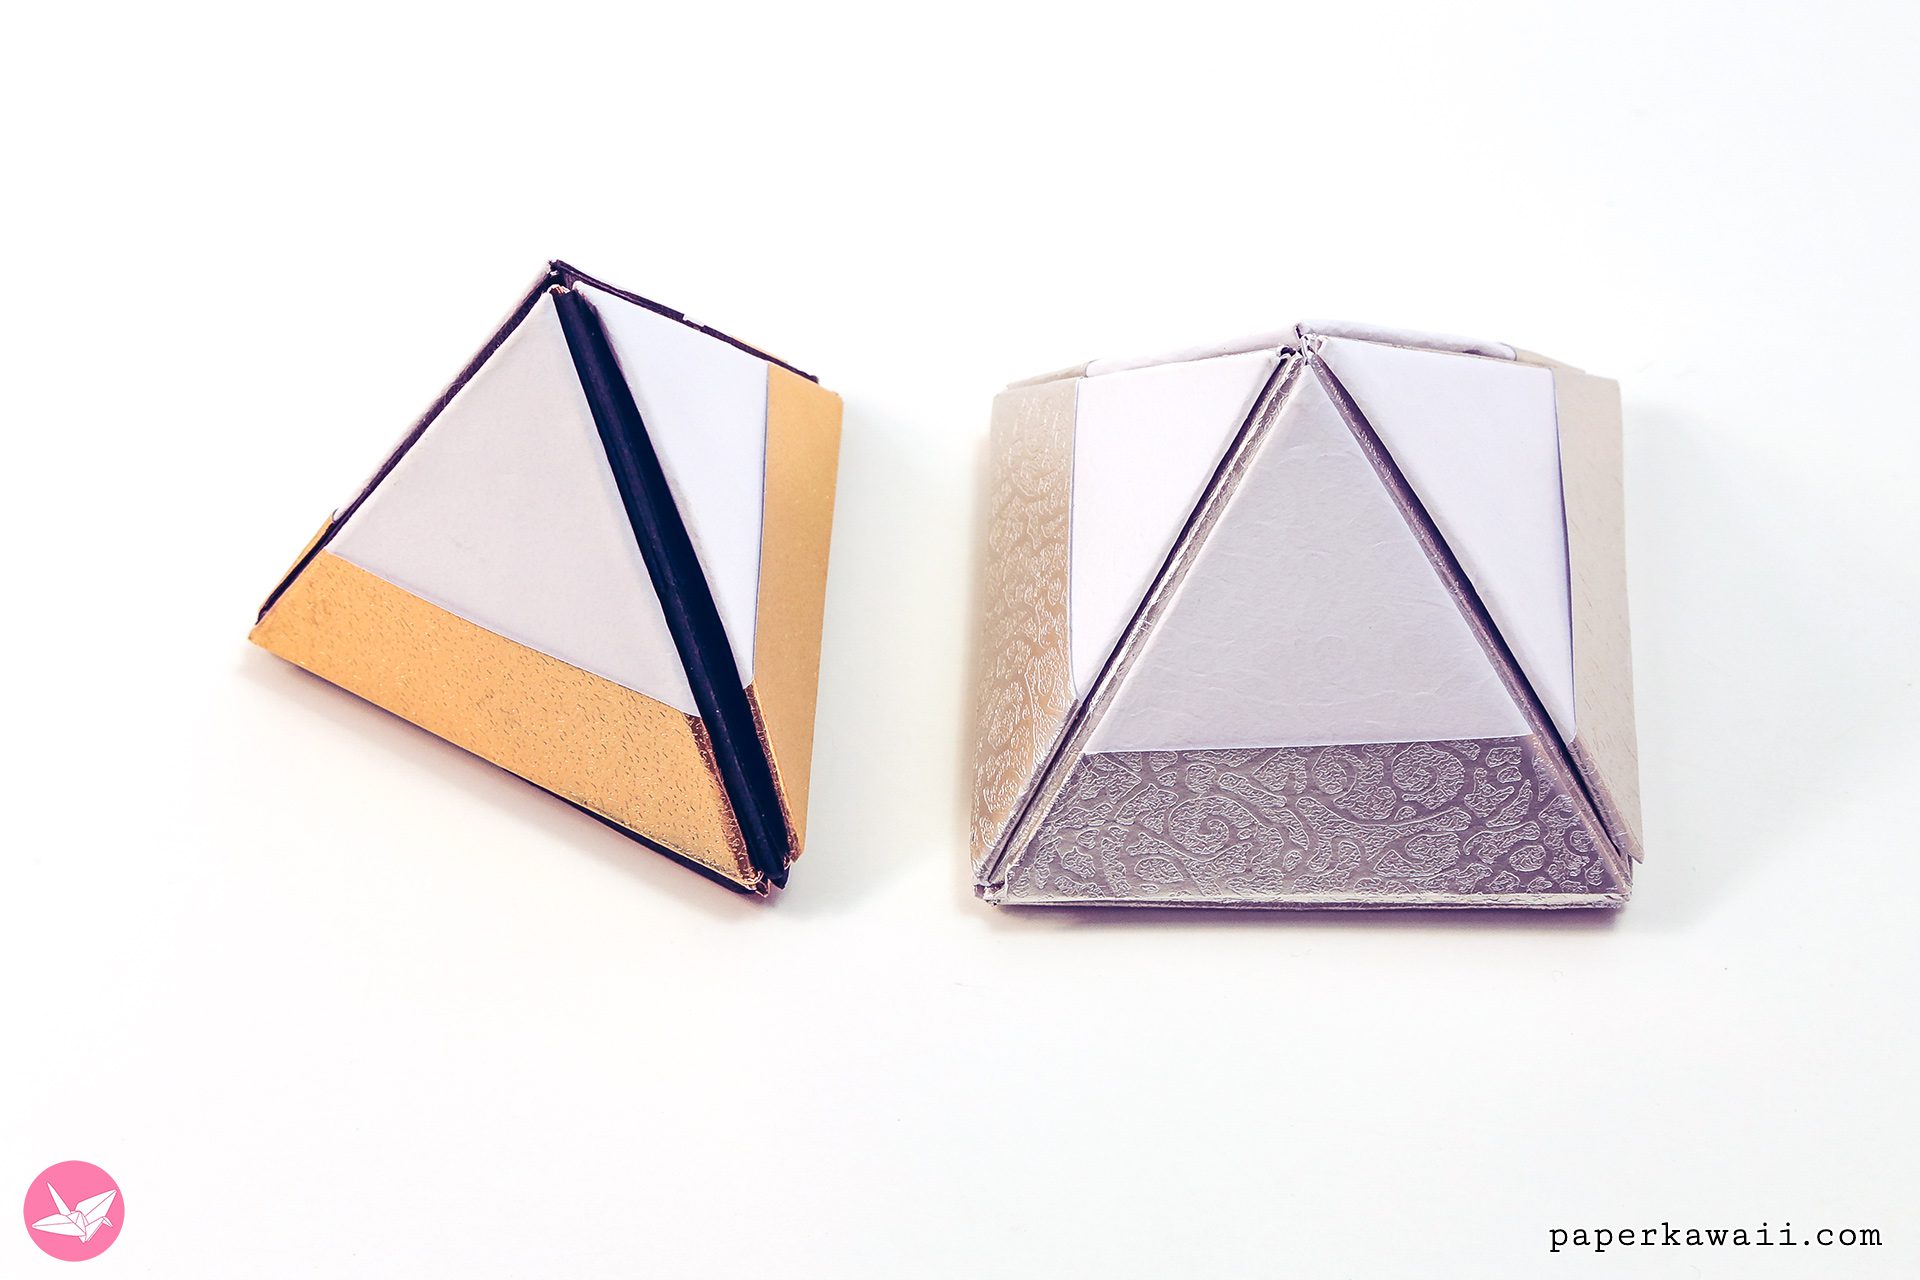 Modular Origami Pyramid Box Tutorial Paper Kawaii 02